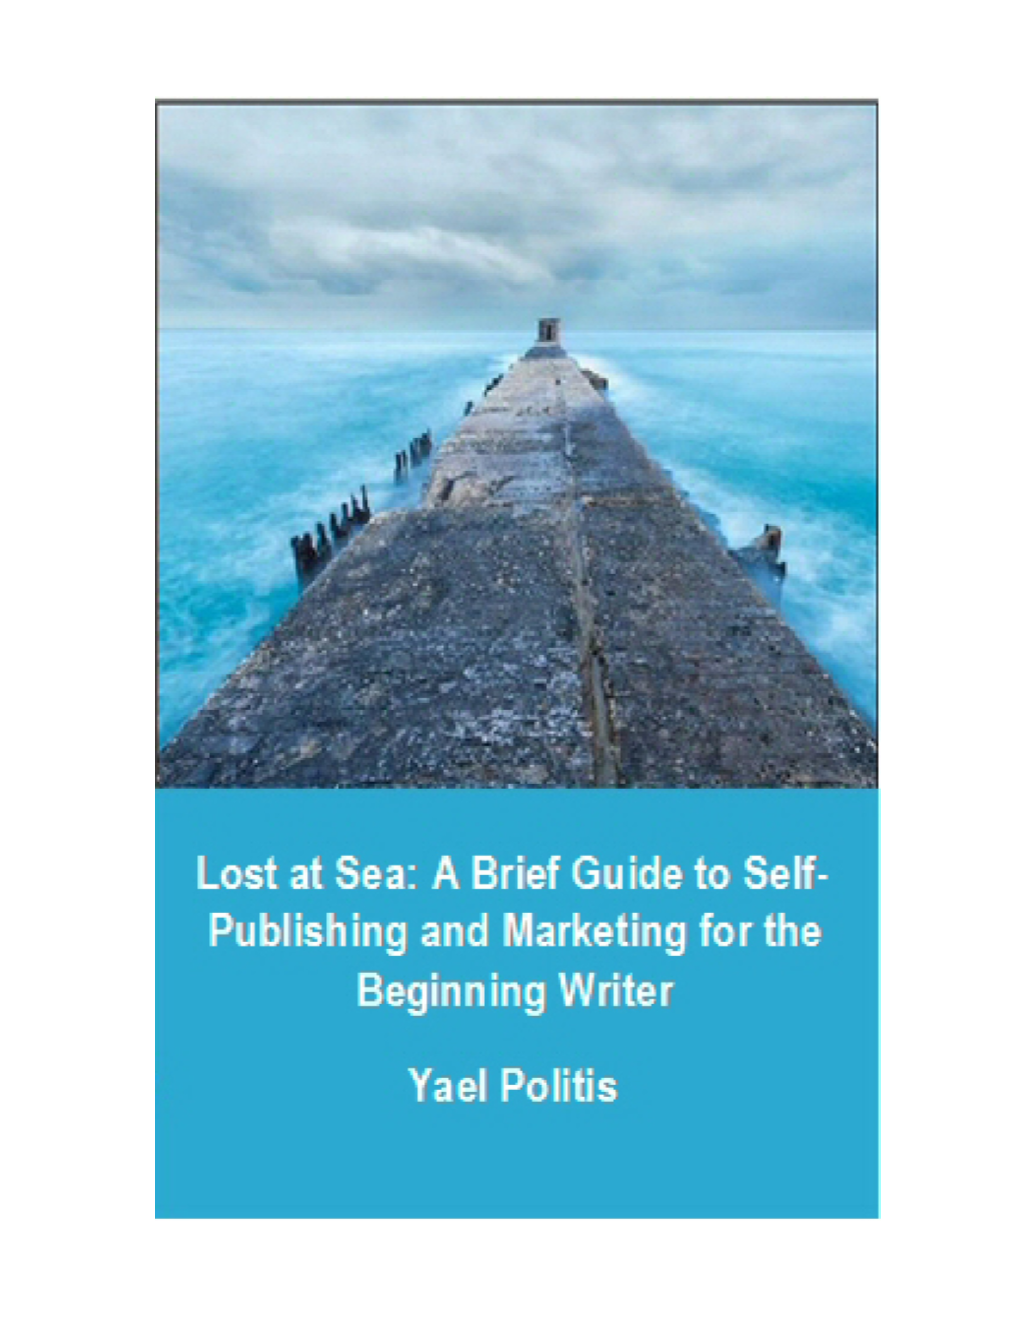 Self-Publishing for Beginners